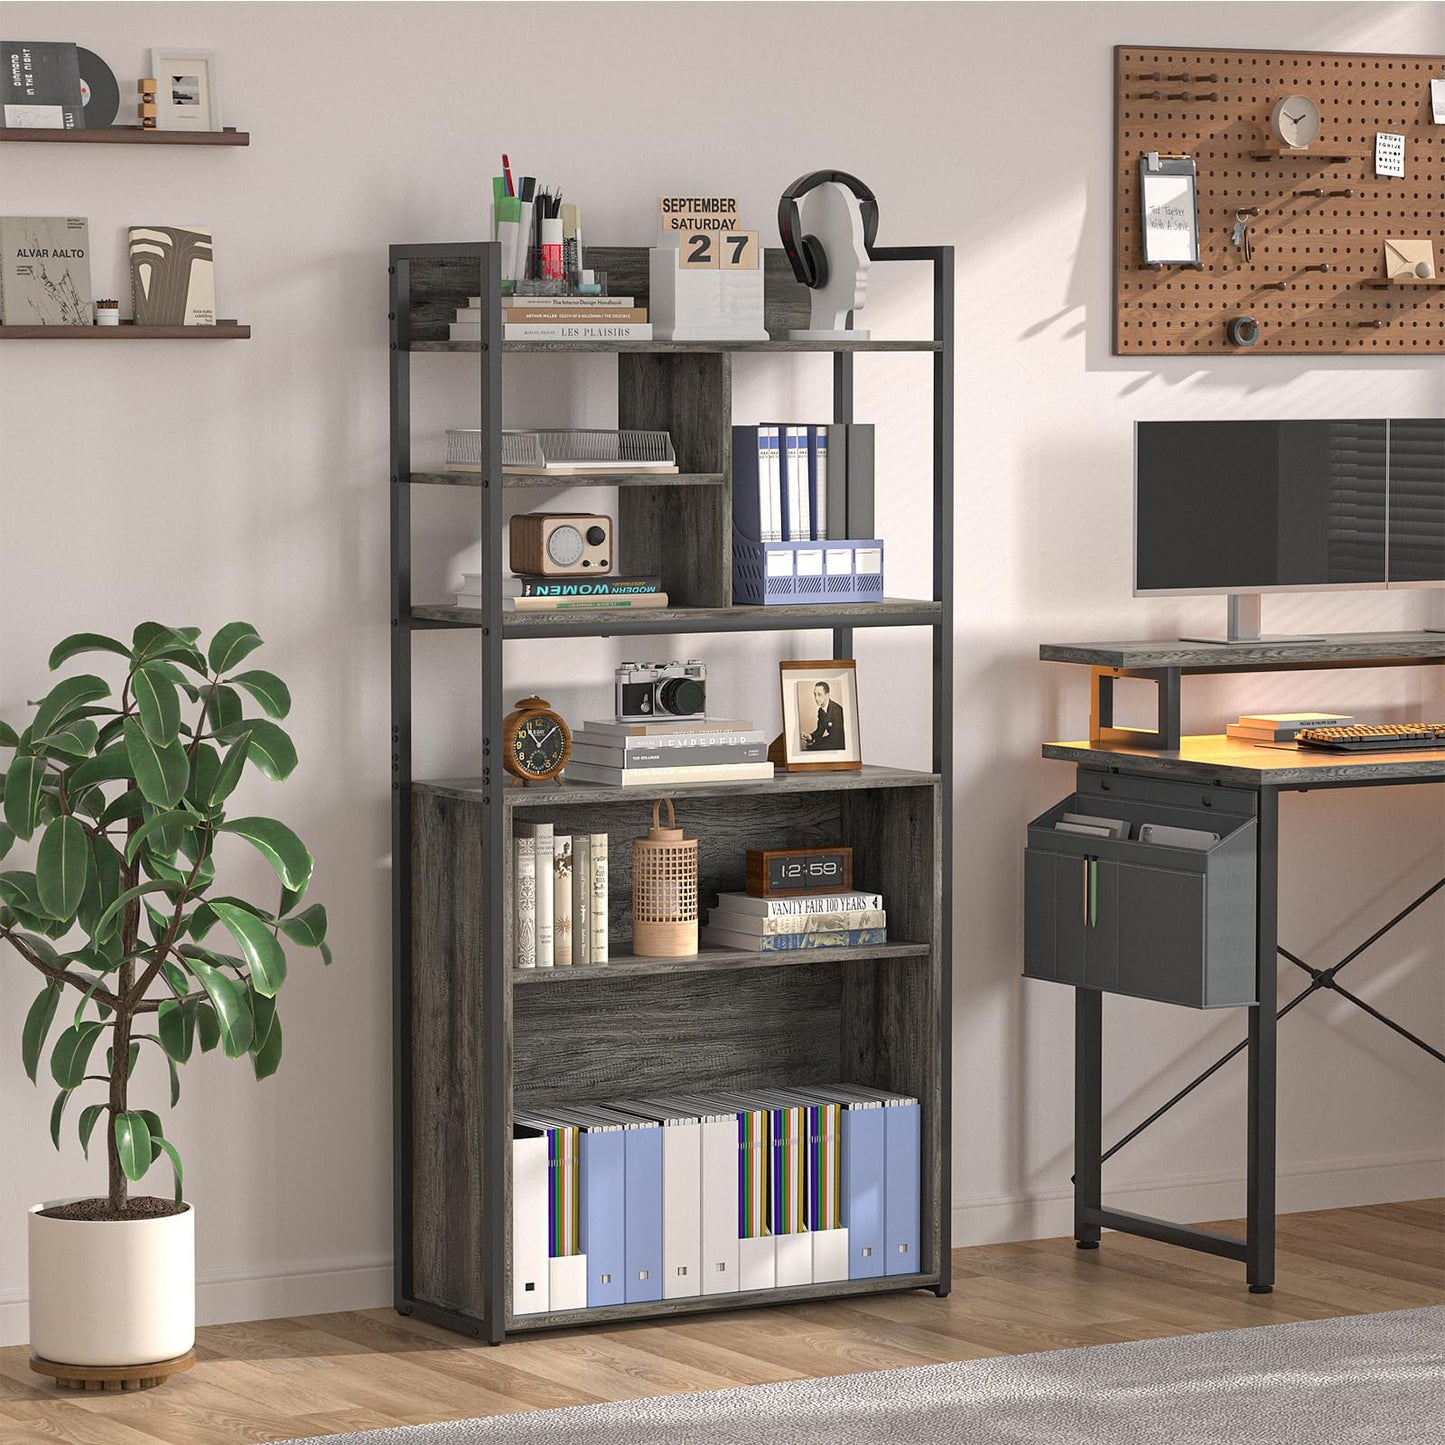 armocity Industrial Bookshelf, 6 Tier Tall Bookshelves Wood Metal Frame Standing Bookcase, Display Book Shelf with Adjustable Storage Shelves for Home Office, Living Room, Bed Room, Grey Oak